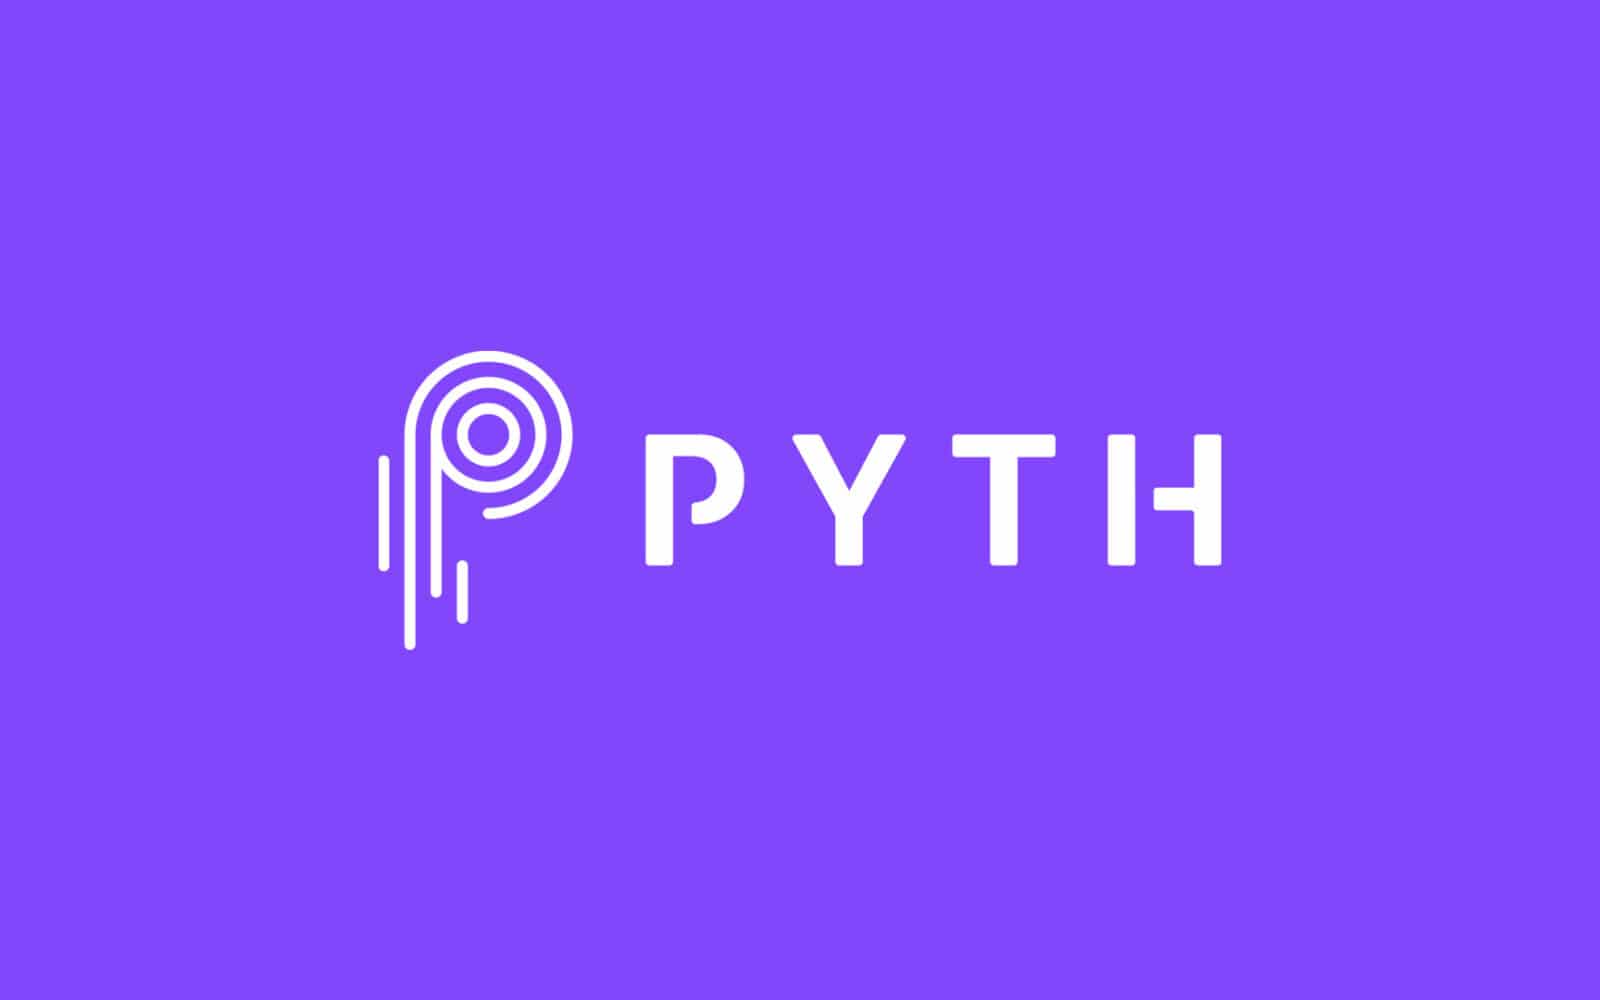 Pyth Network crypto logo